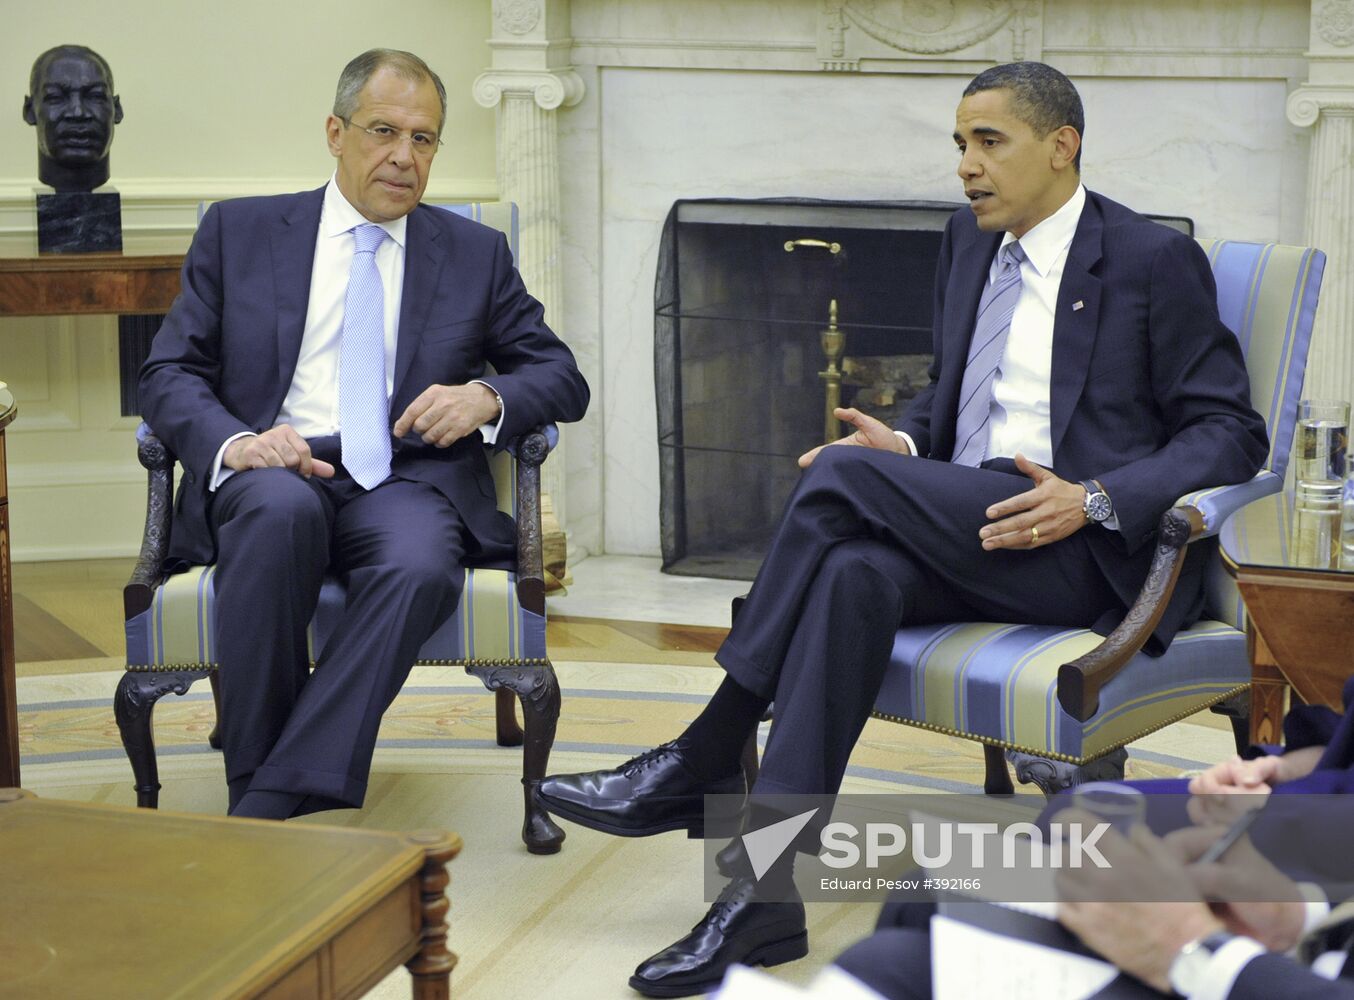 Sergei Lavrov meeting with Barack Obama